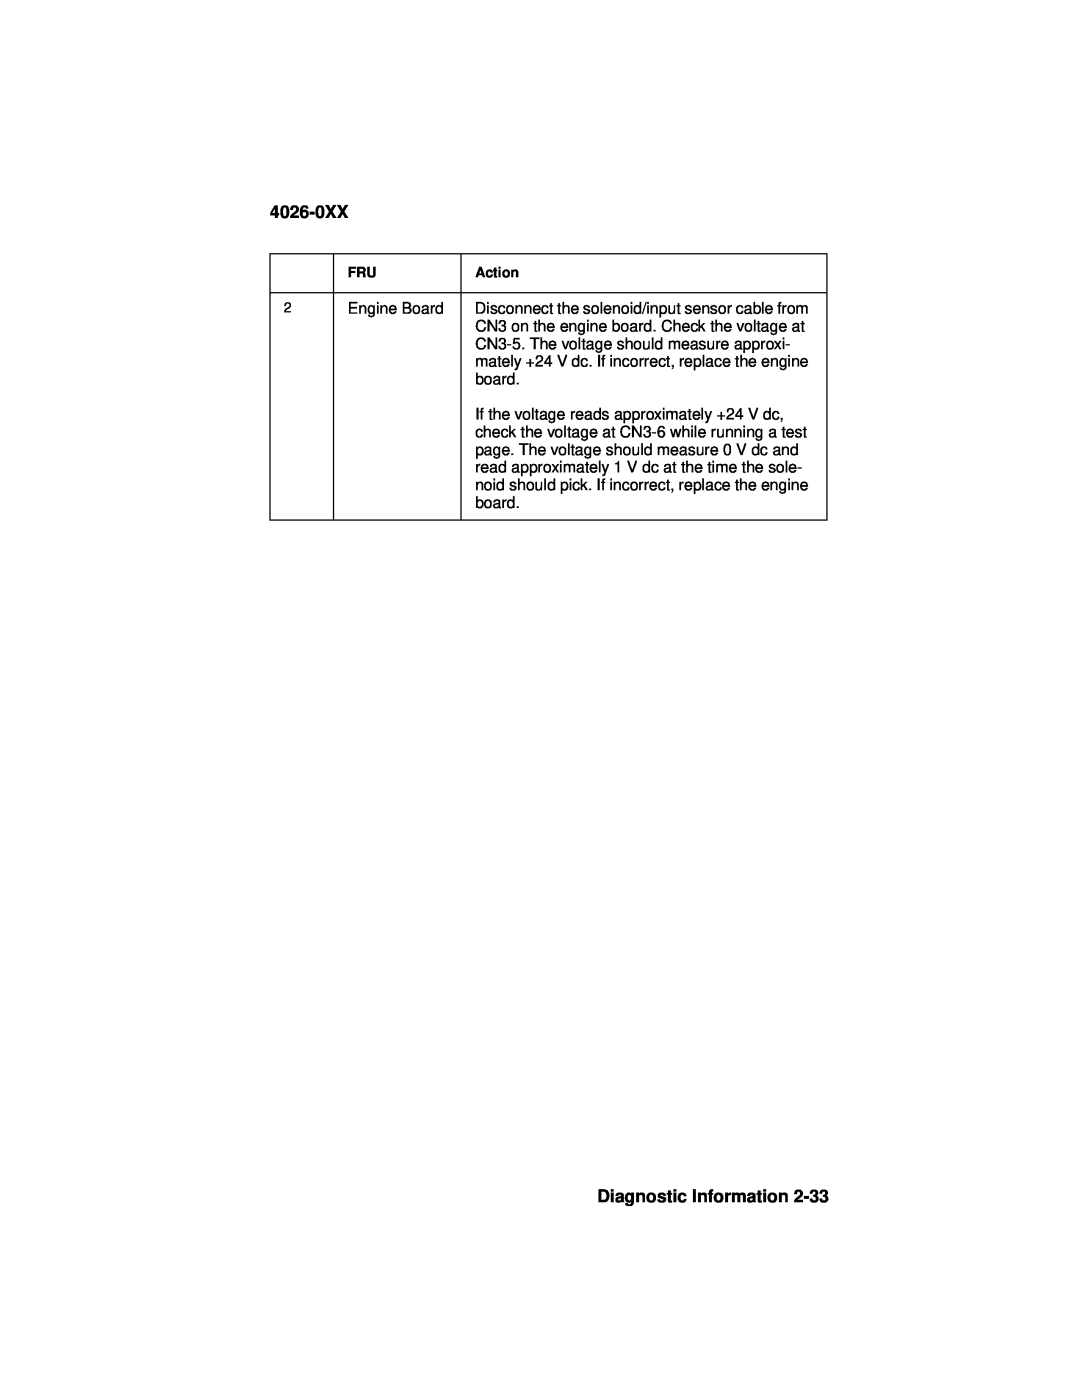 Lexmark OptraTM manual 4026-0XX, Diagnostic Information, Engine Board 